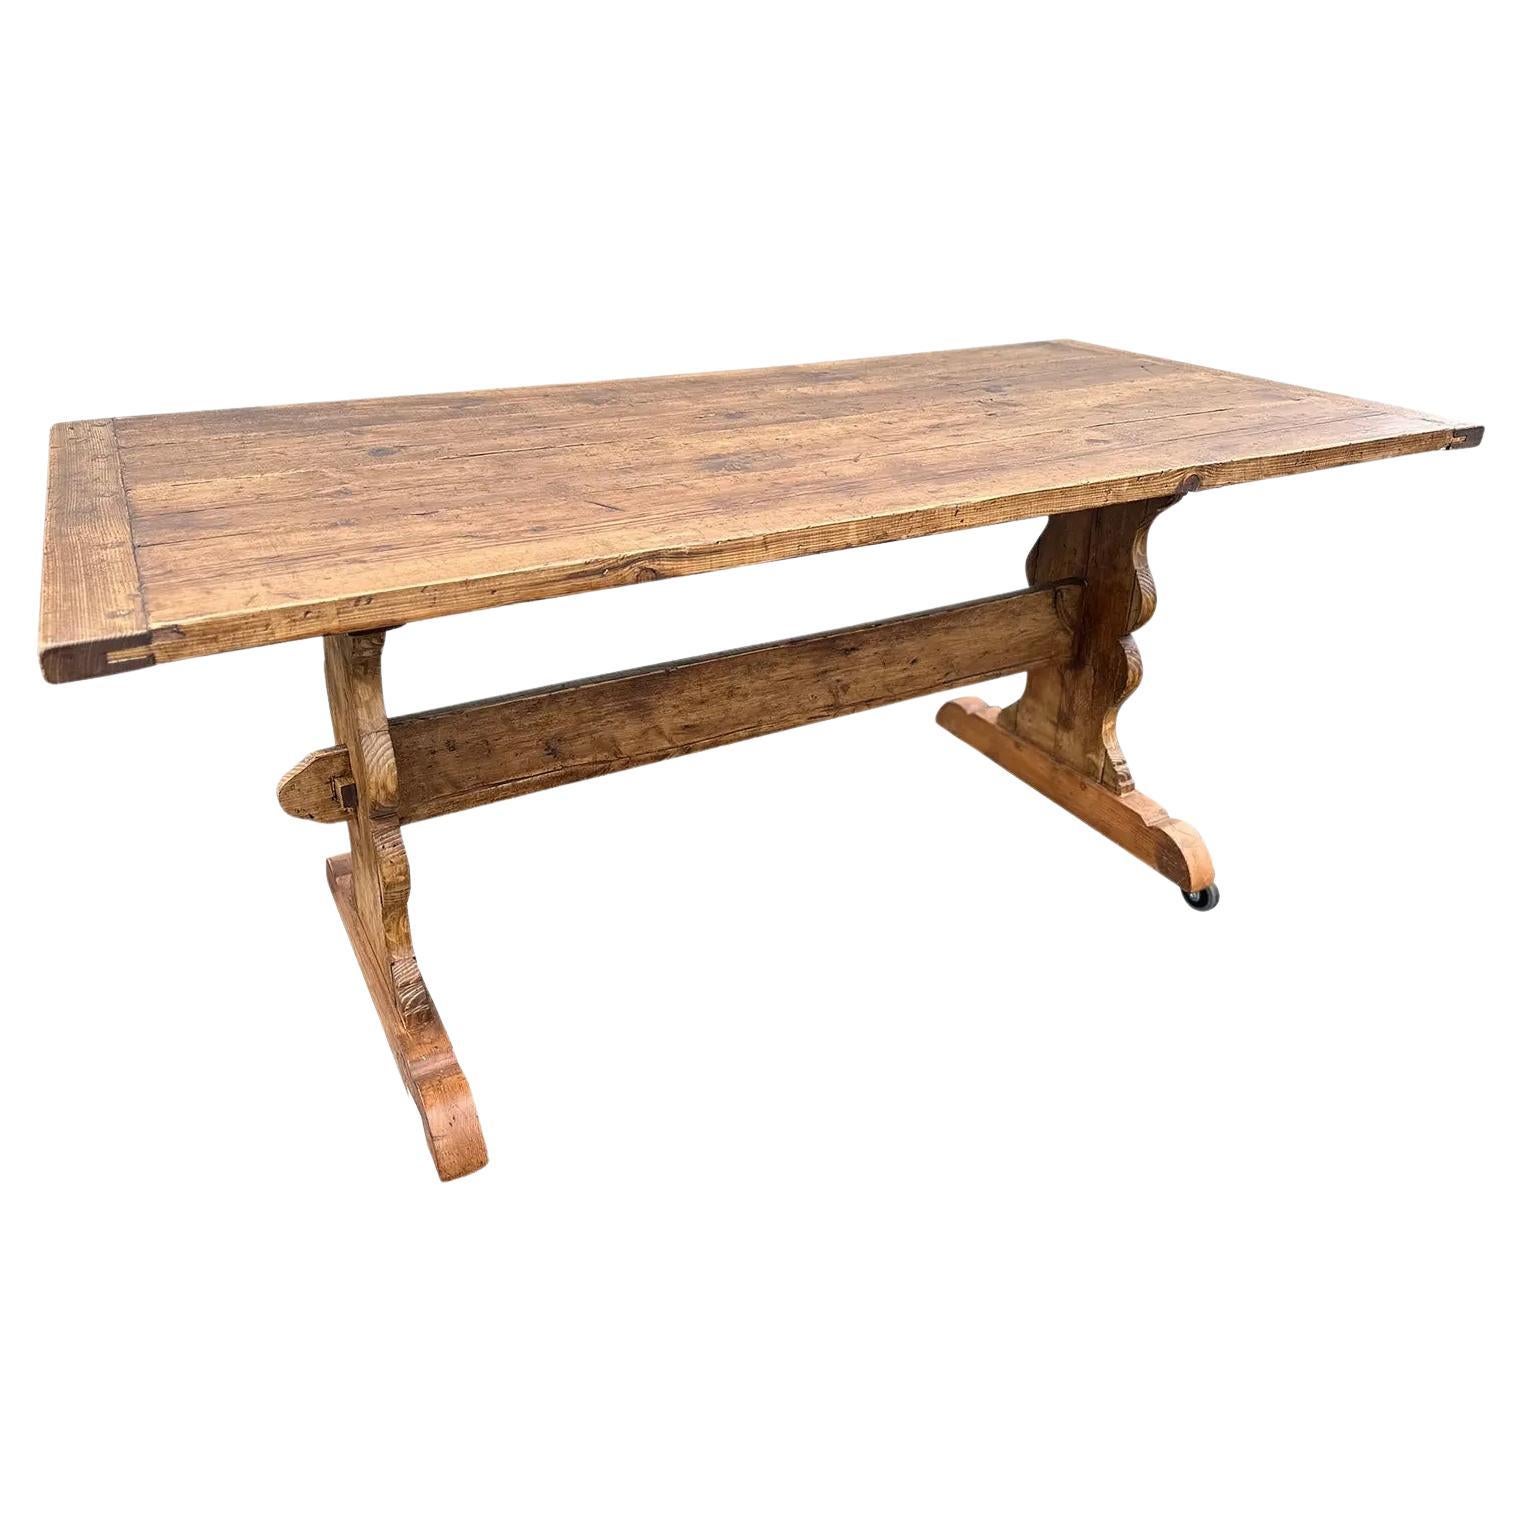 English Pine Trestle Table